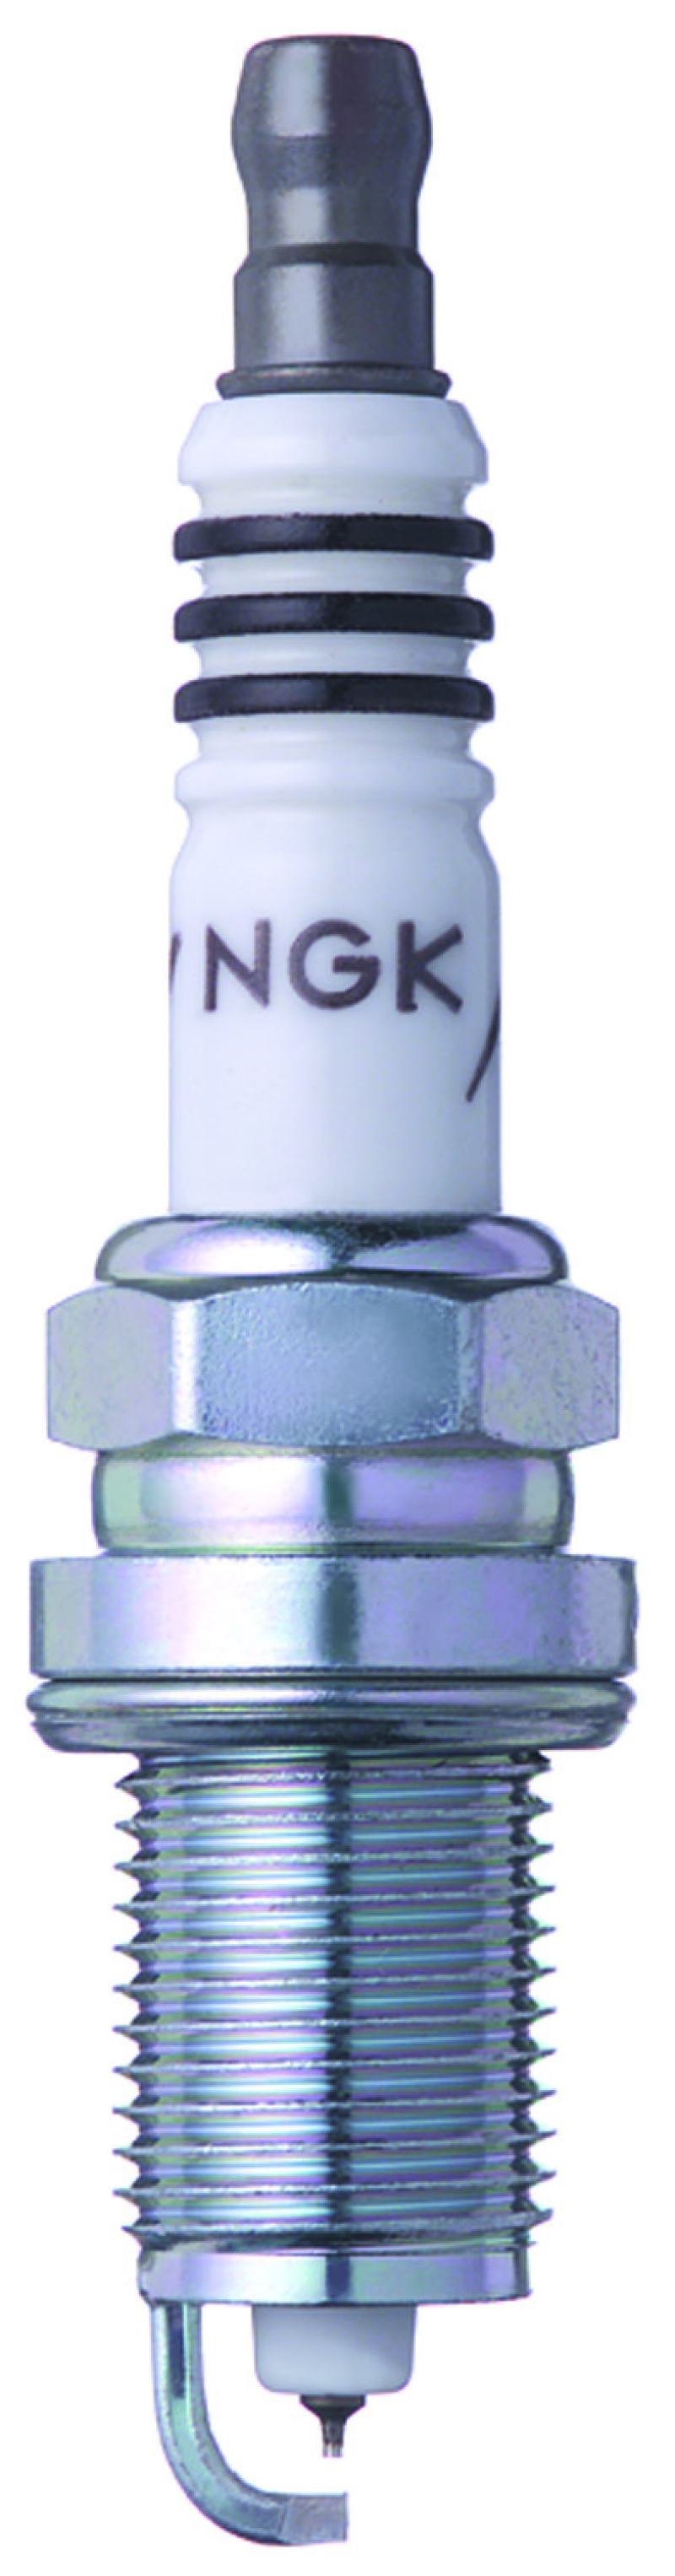 NGK Iridium Spark Plugs Box of 4 (ZFR5FIX-11) - 2477